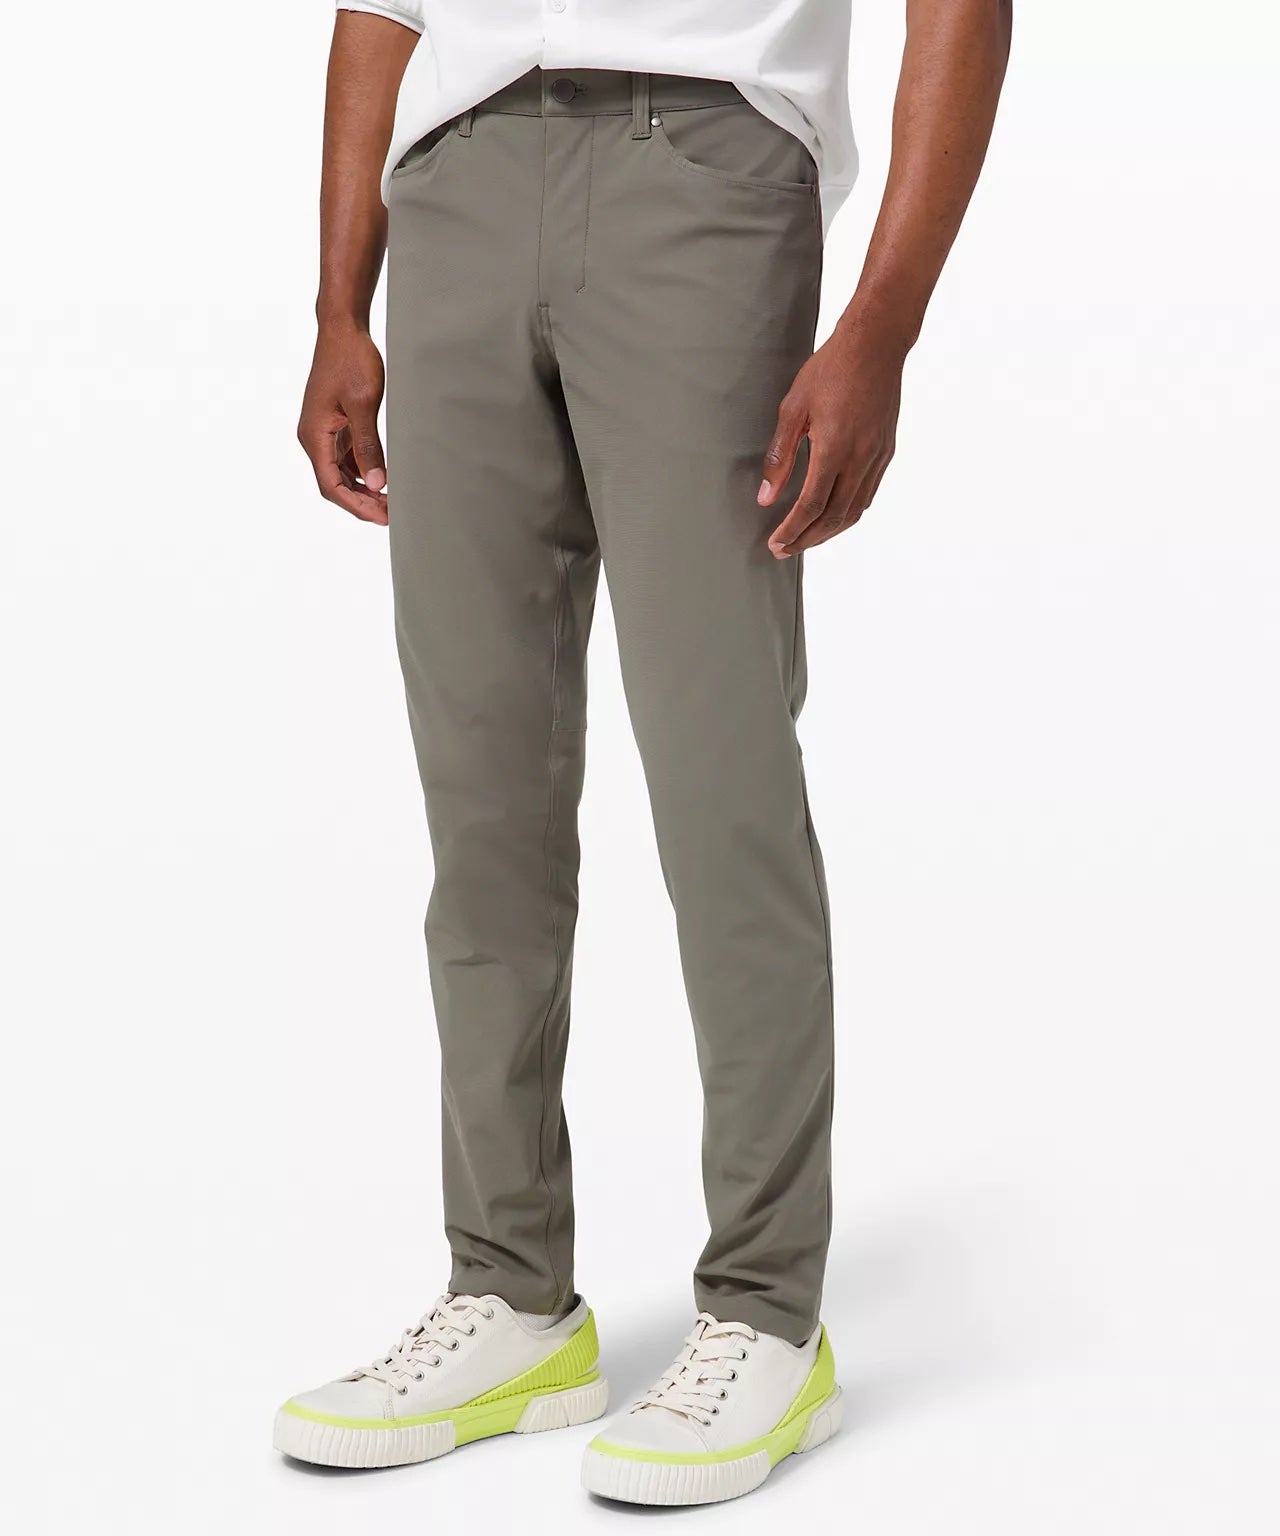 8 pairs of golf pants that provide sweatpant-like comfort: Editor's Picks